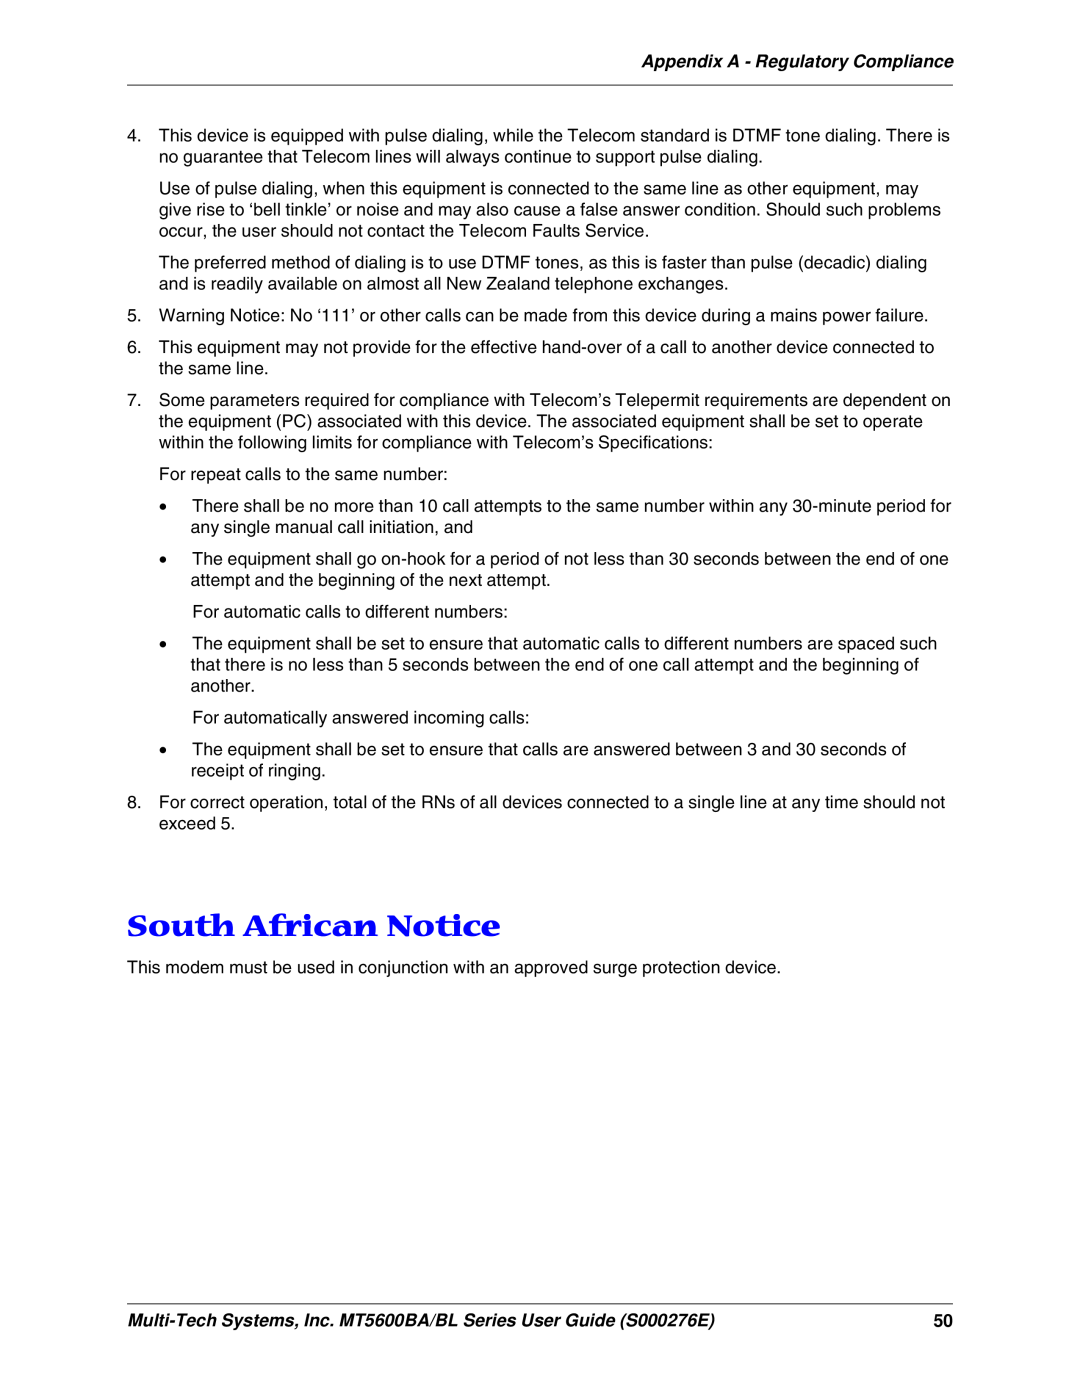 Multitech MT5600BL, MT5600BA manual South African Notice 